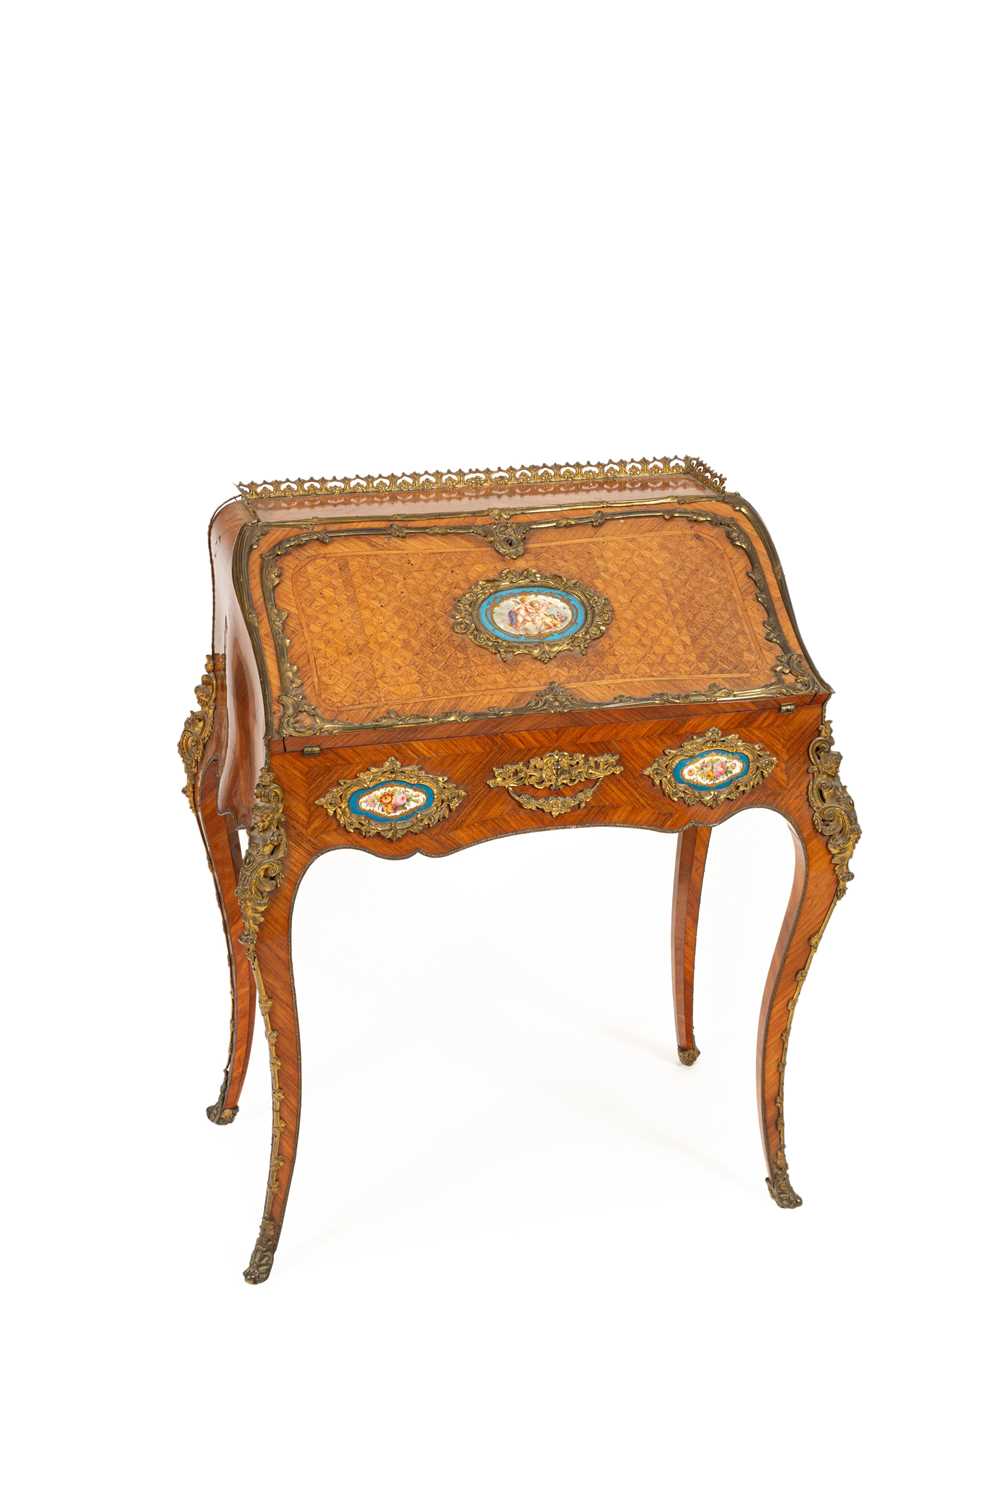 A Louis XV style ormolu mounted kingwood bureau de dame